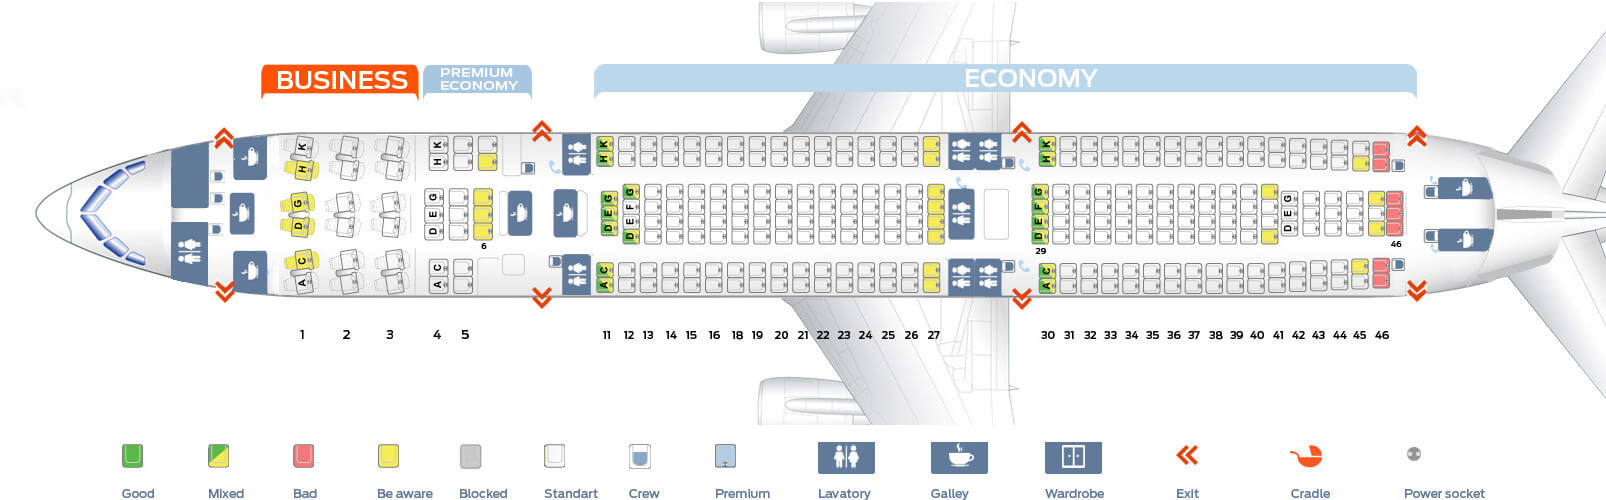 Lufthansa Airbus A340-300 seat map